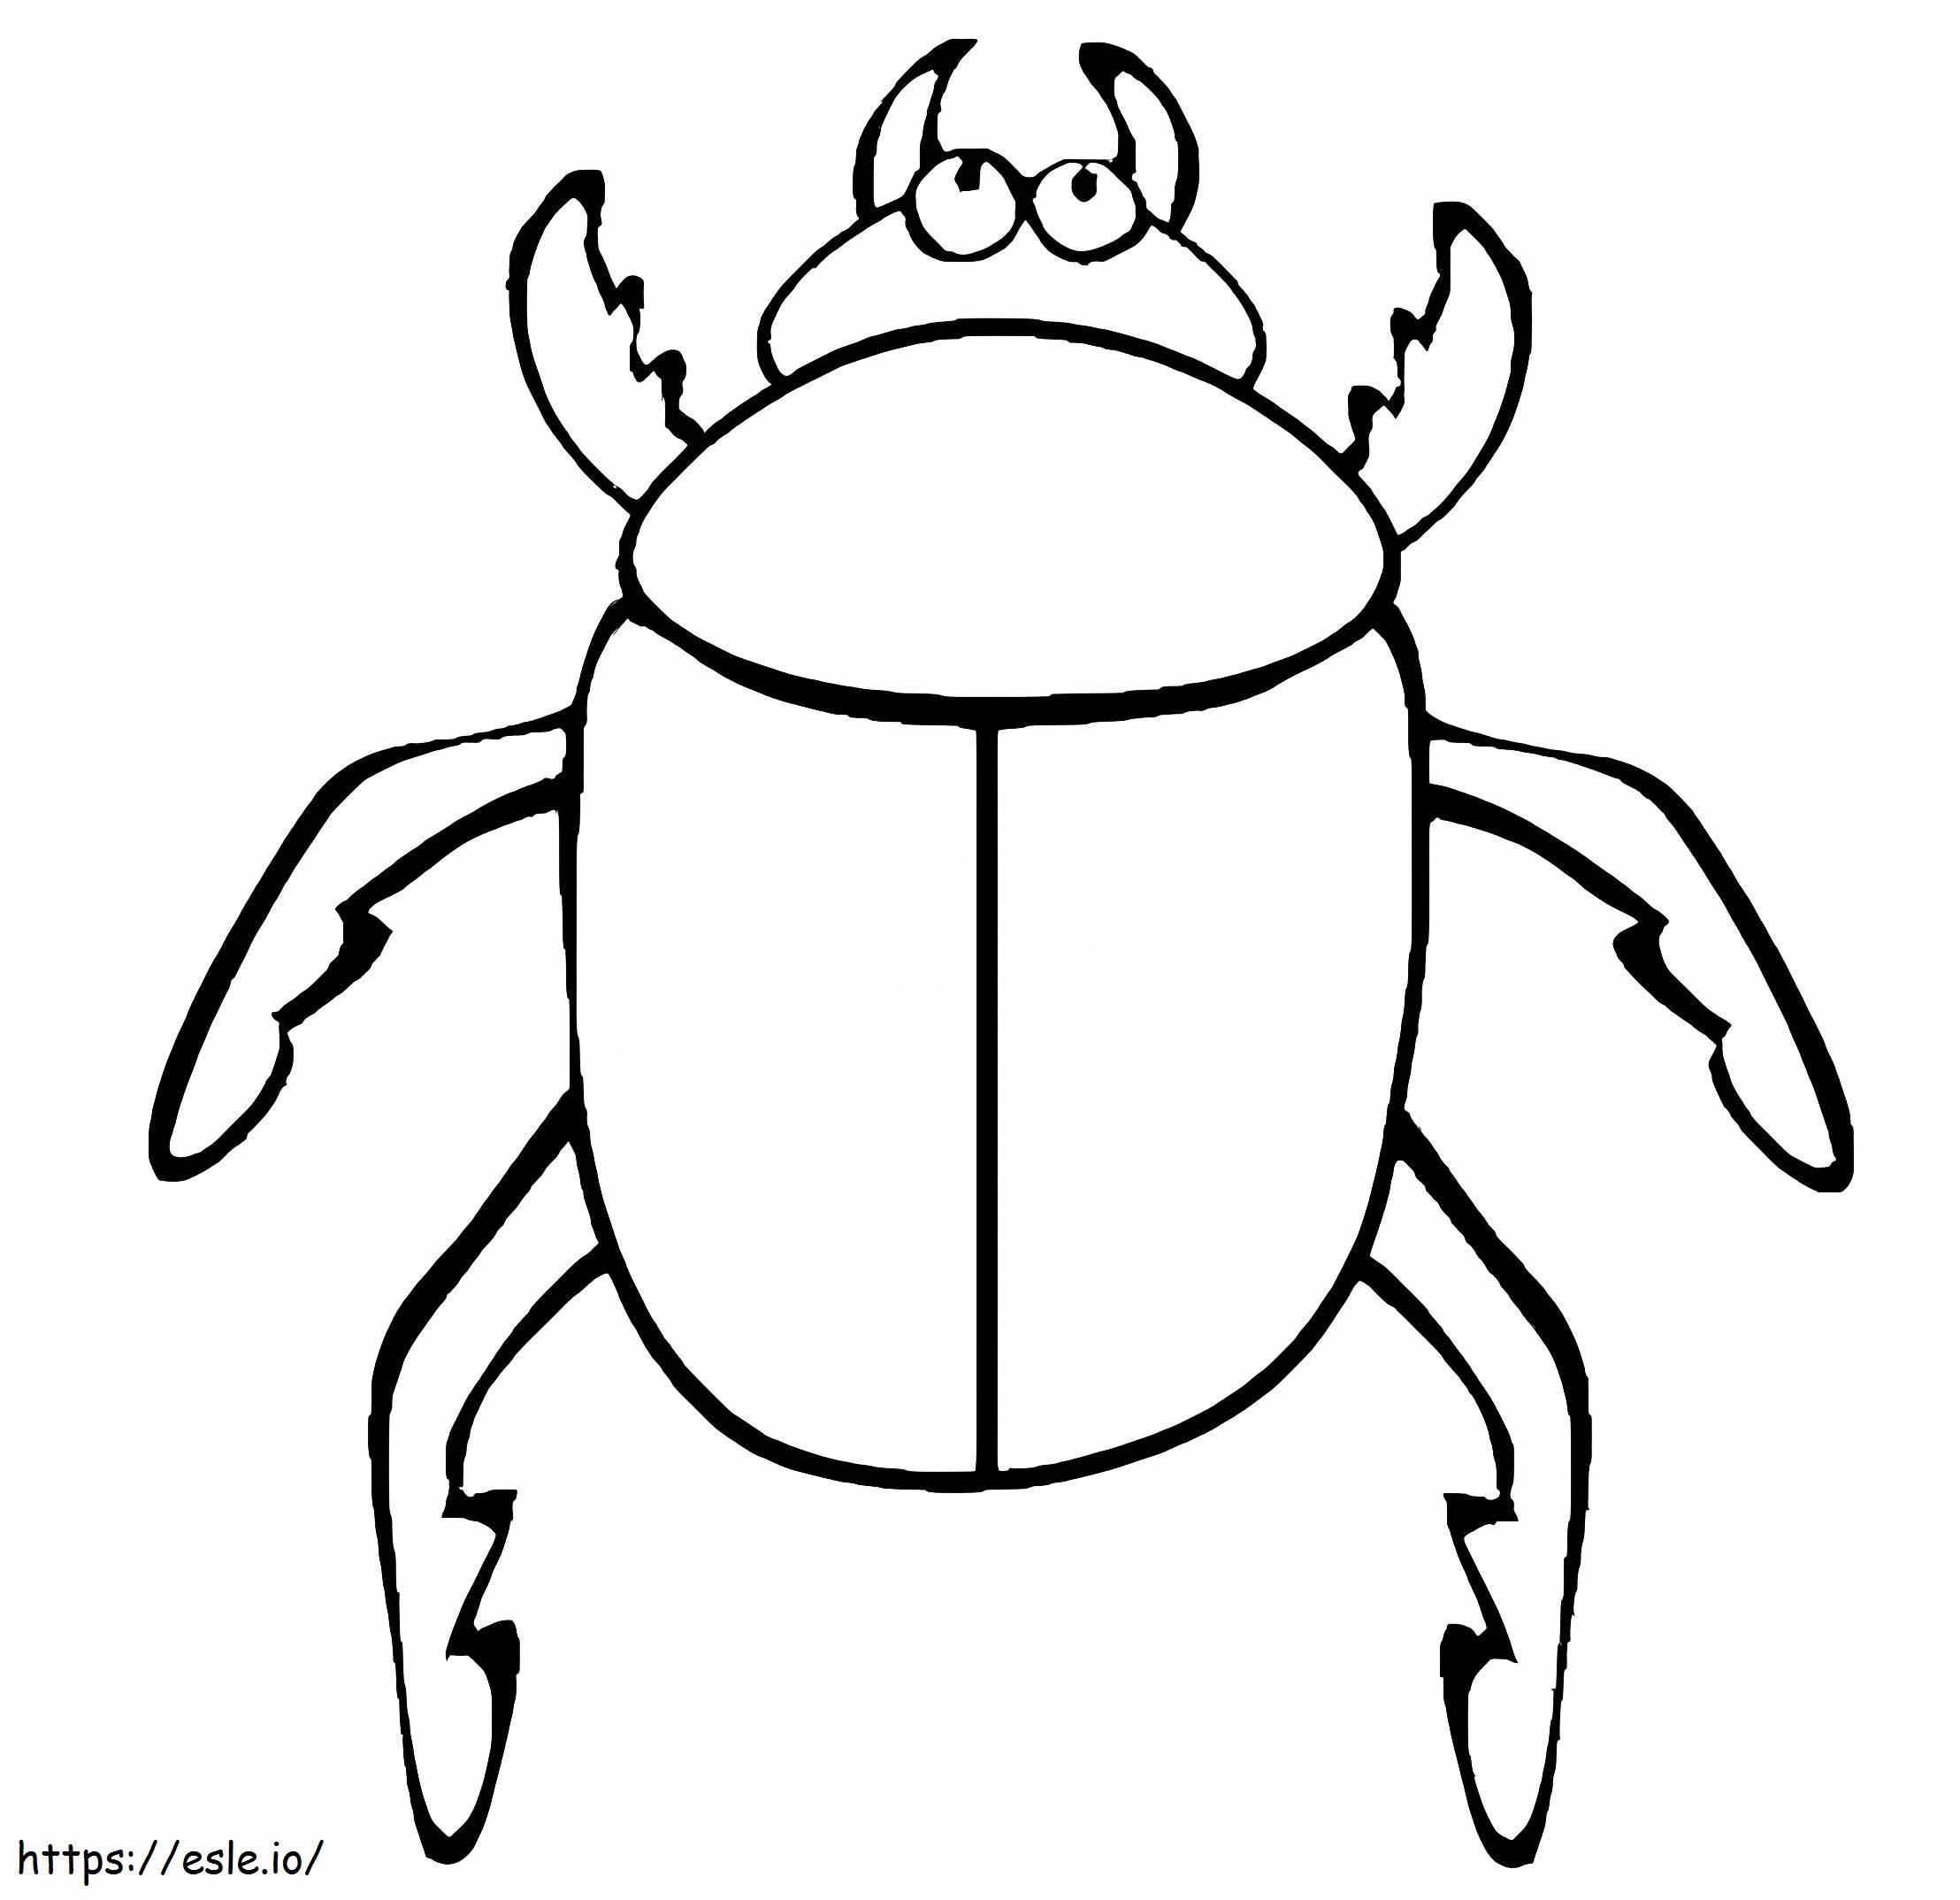 Lustiger Käfer ausmalbilder